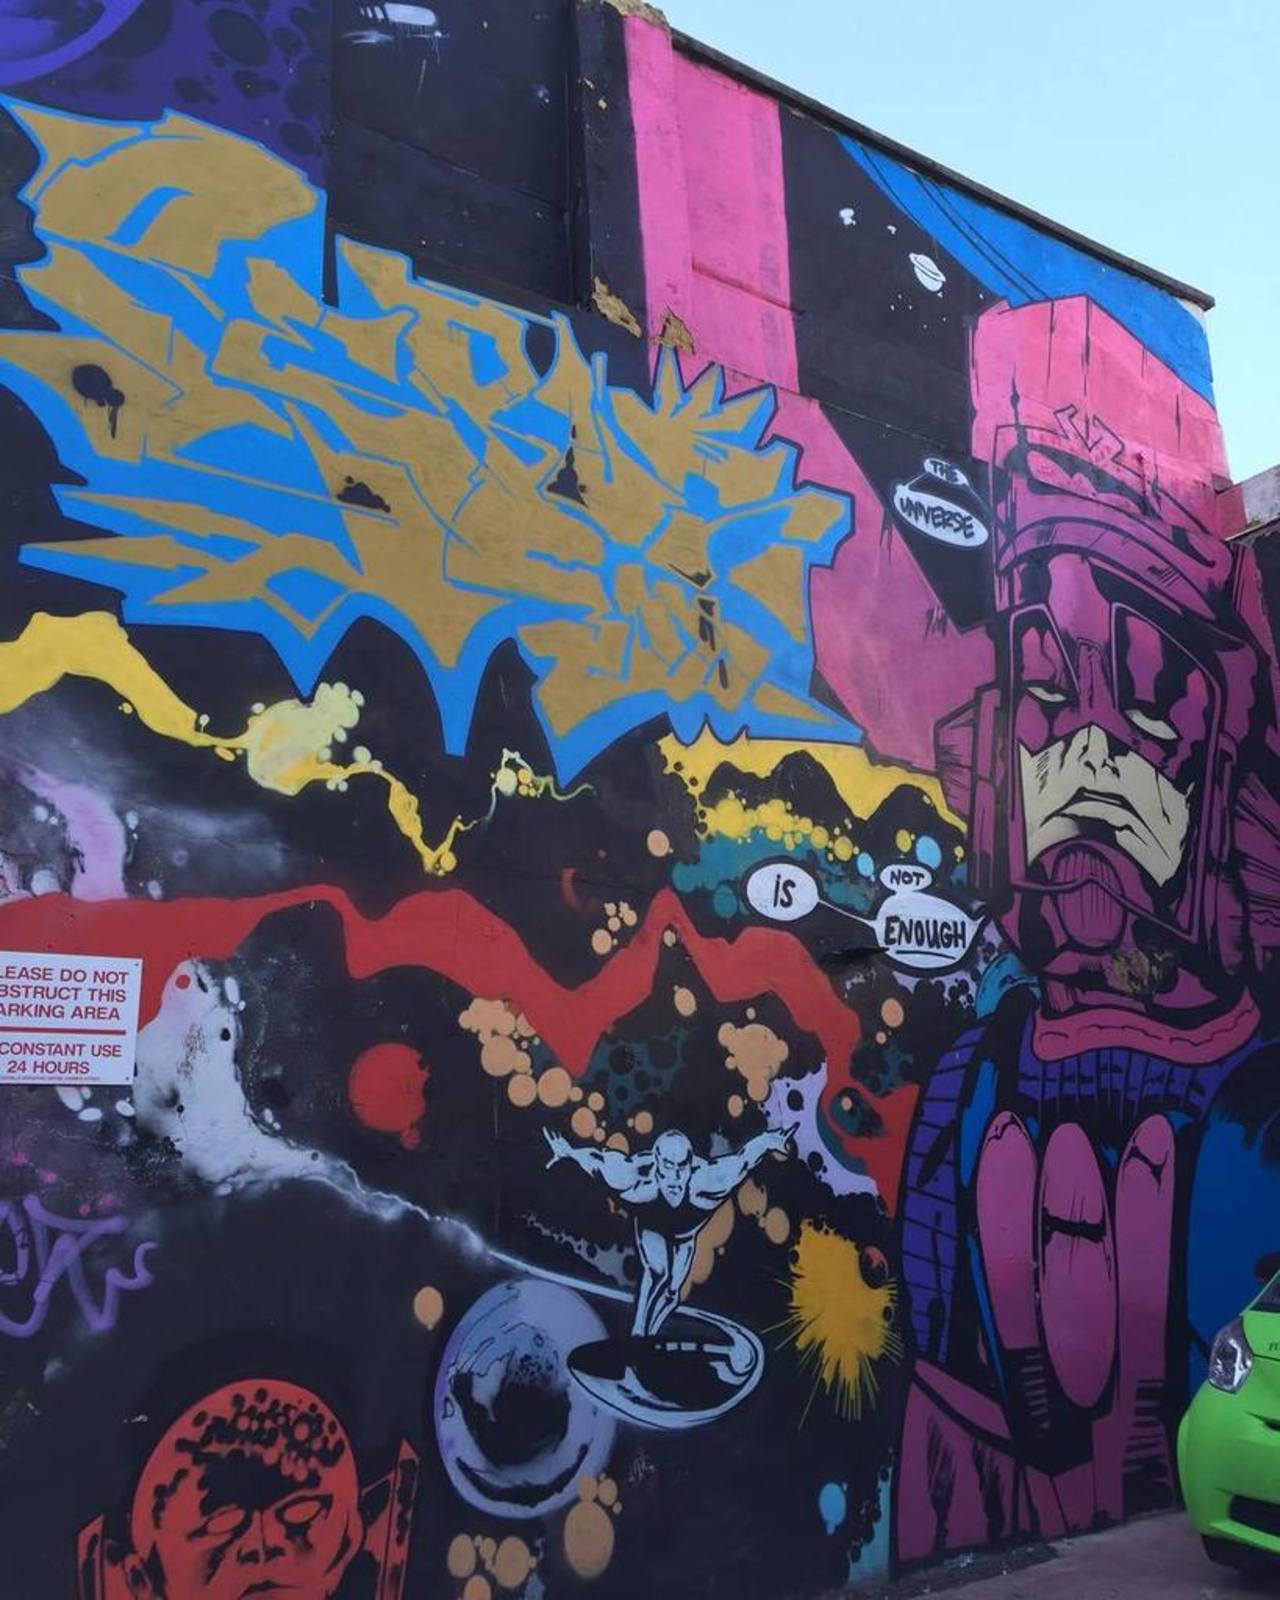 via #vera45 "http://ift.tt/1R81H7Q" #graffiti #streetart http://t.co/n4bD51isoz